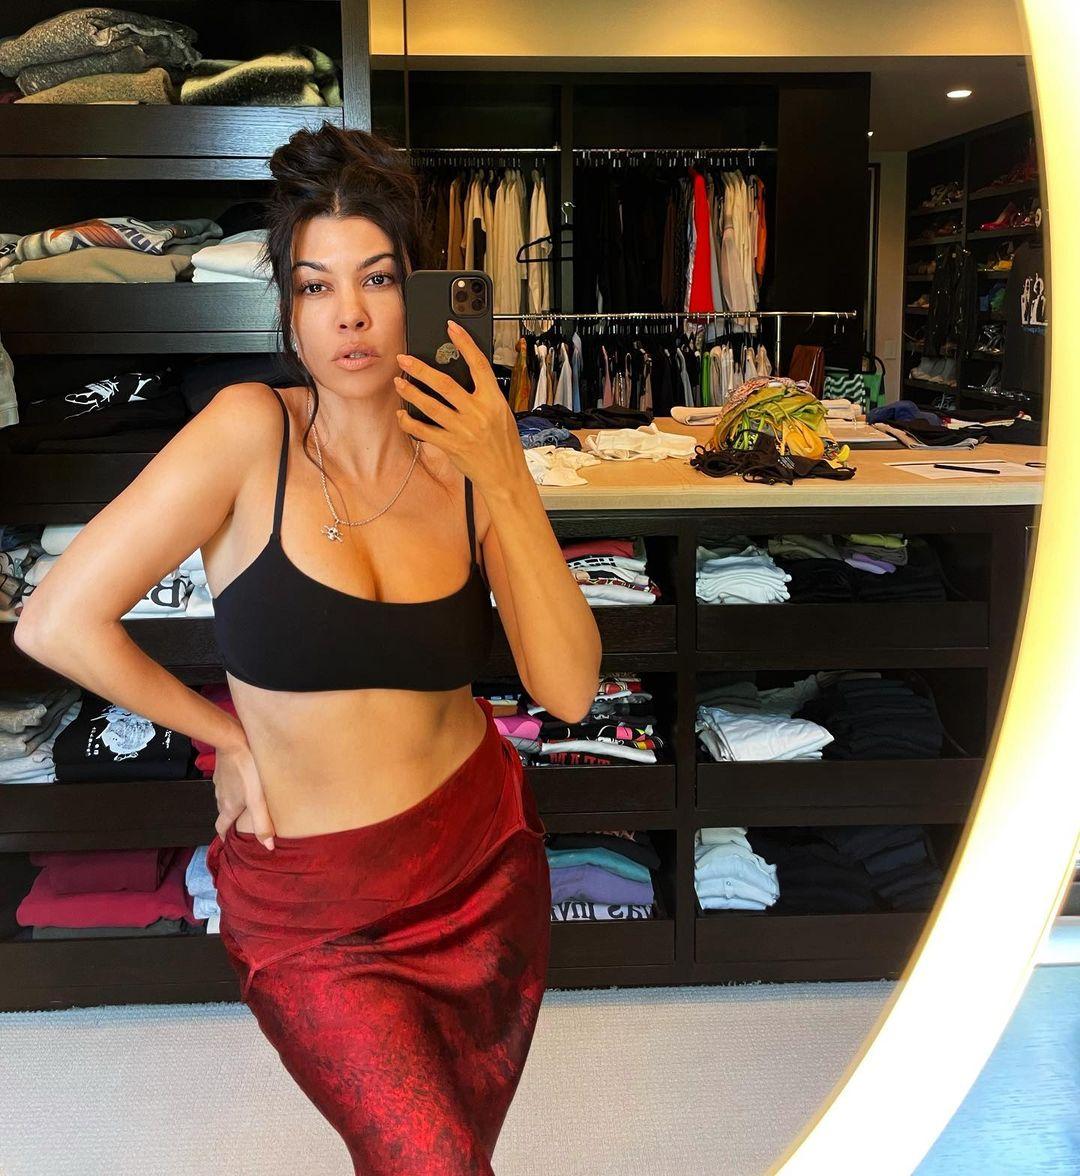 A photo showing Kourtney Kardashian in a mirror selfie